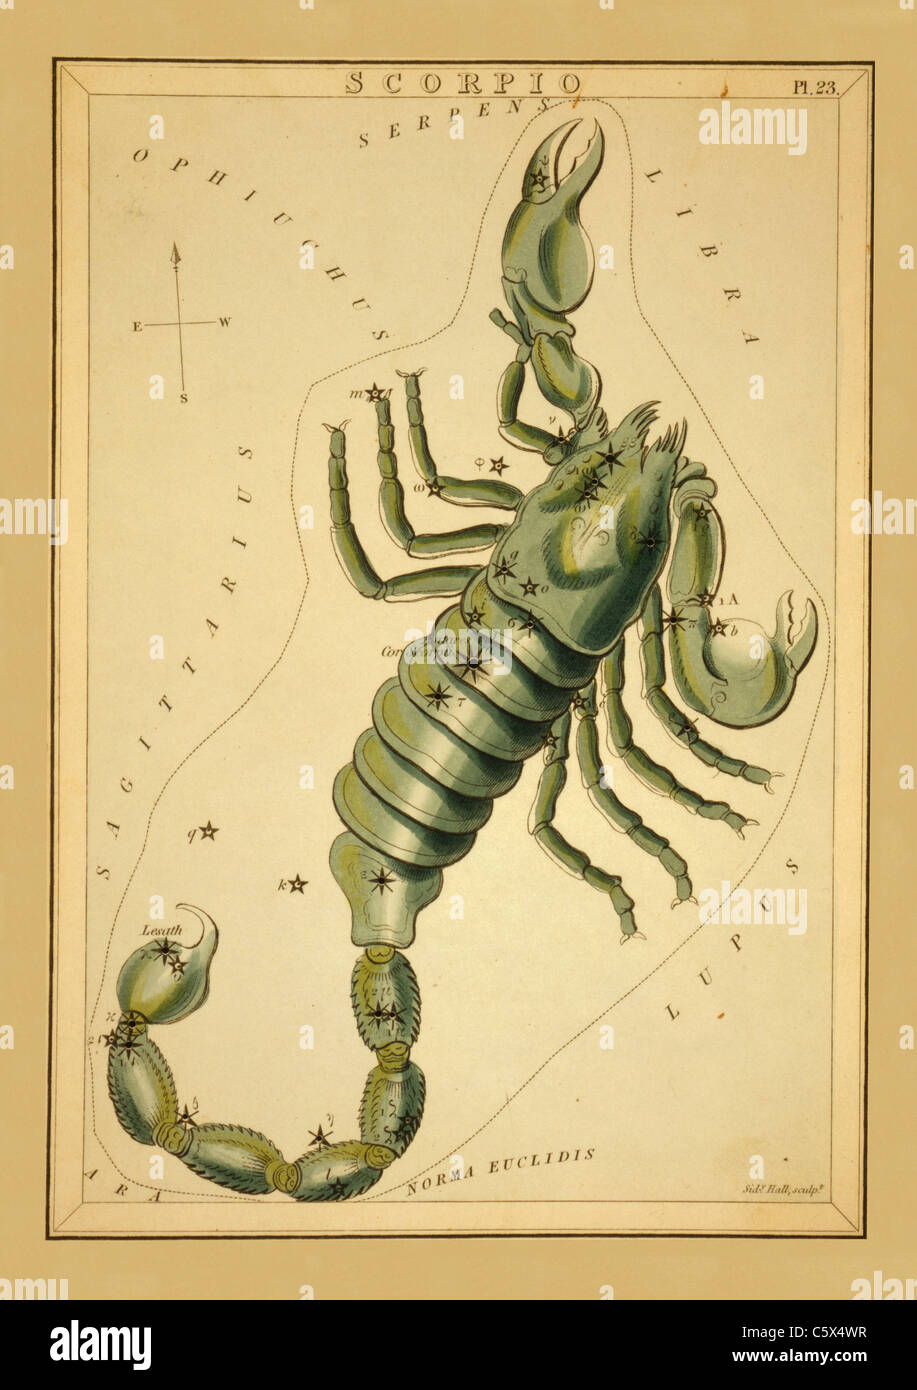 Scorpio - 1825 Astronomical Chart Stock Photo